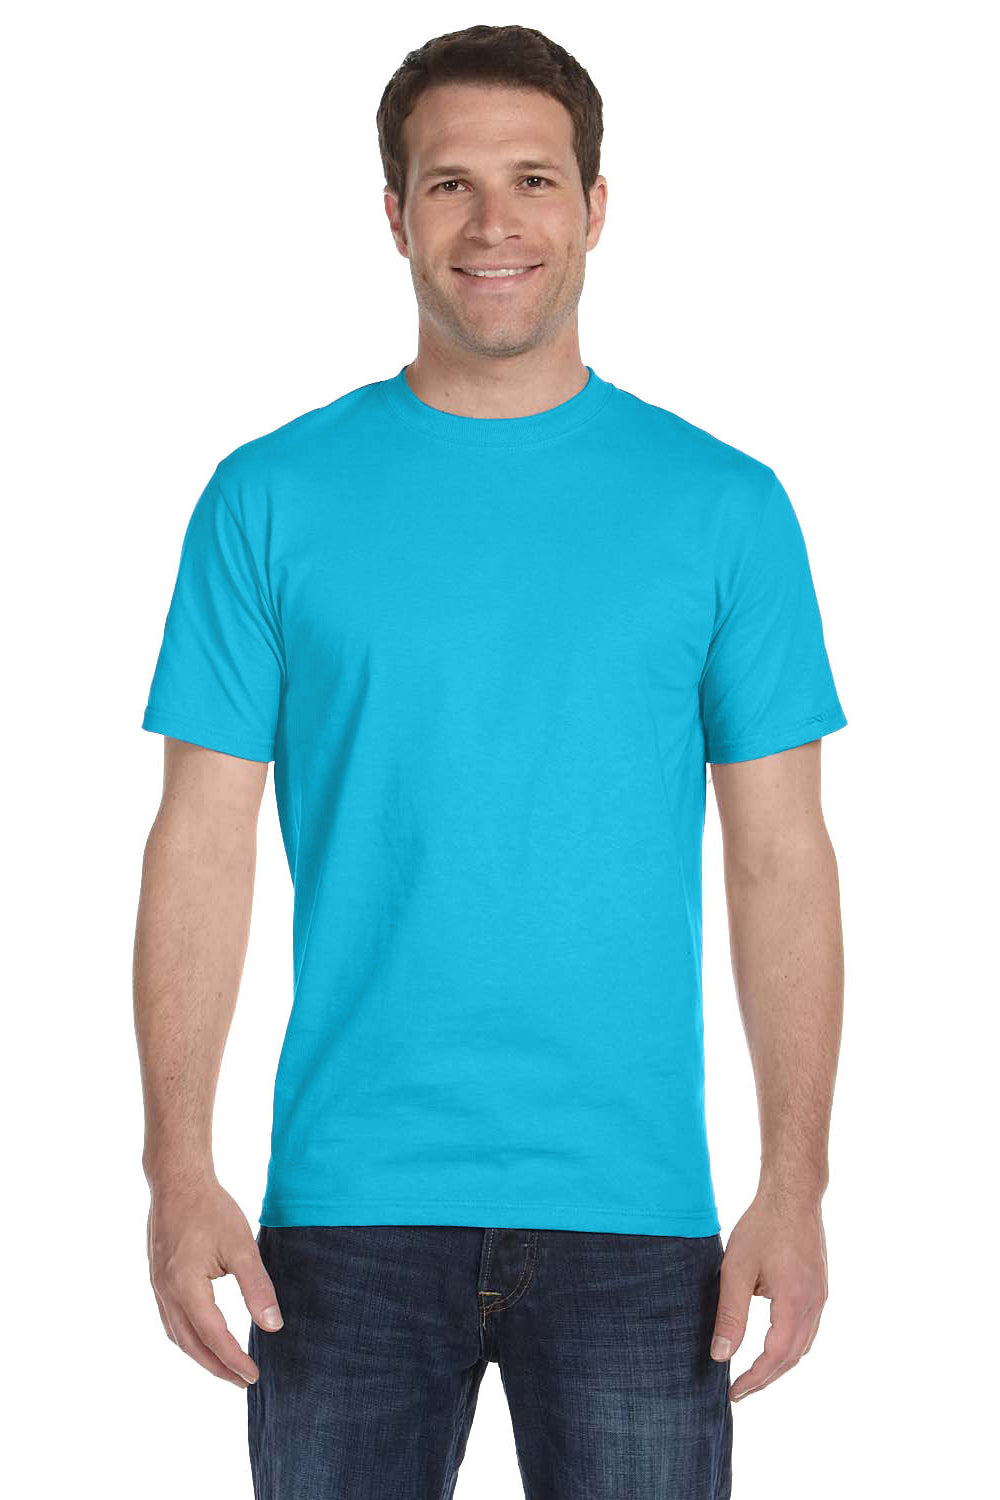 Hanes 5280 Mens ComfortSoft Short Sleeve Crewneck T-Shirt Blue Horizon Front